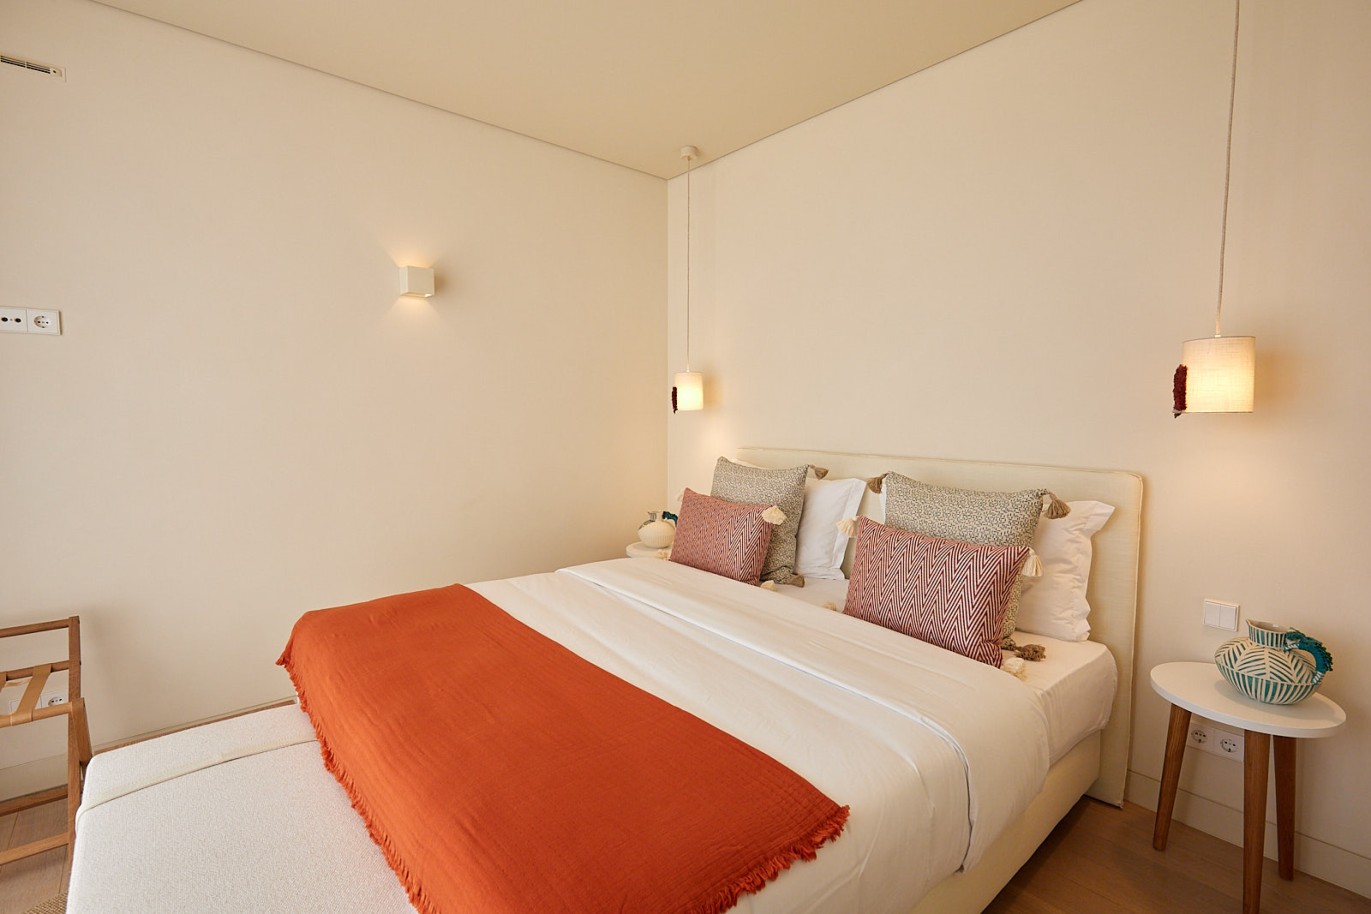 2 bedroom apartment in resort, for sale in Porches, Algarve_230490